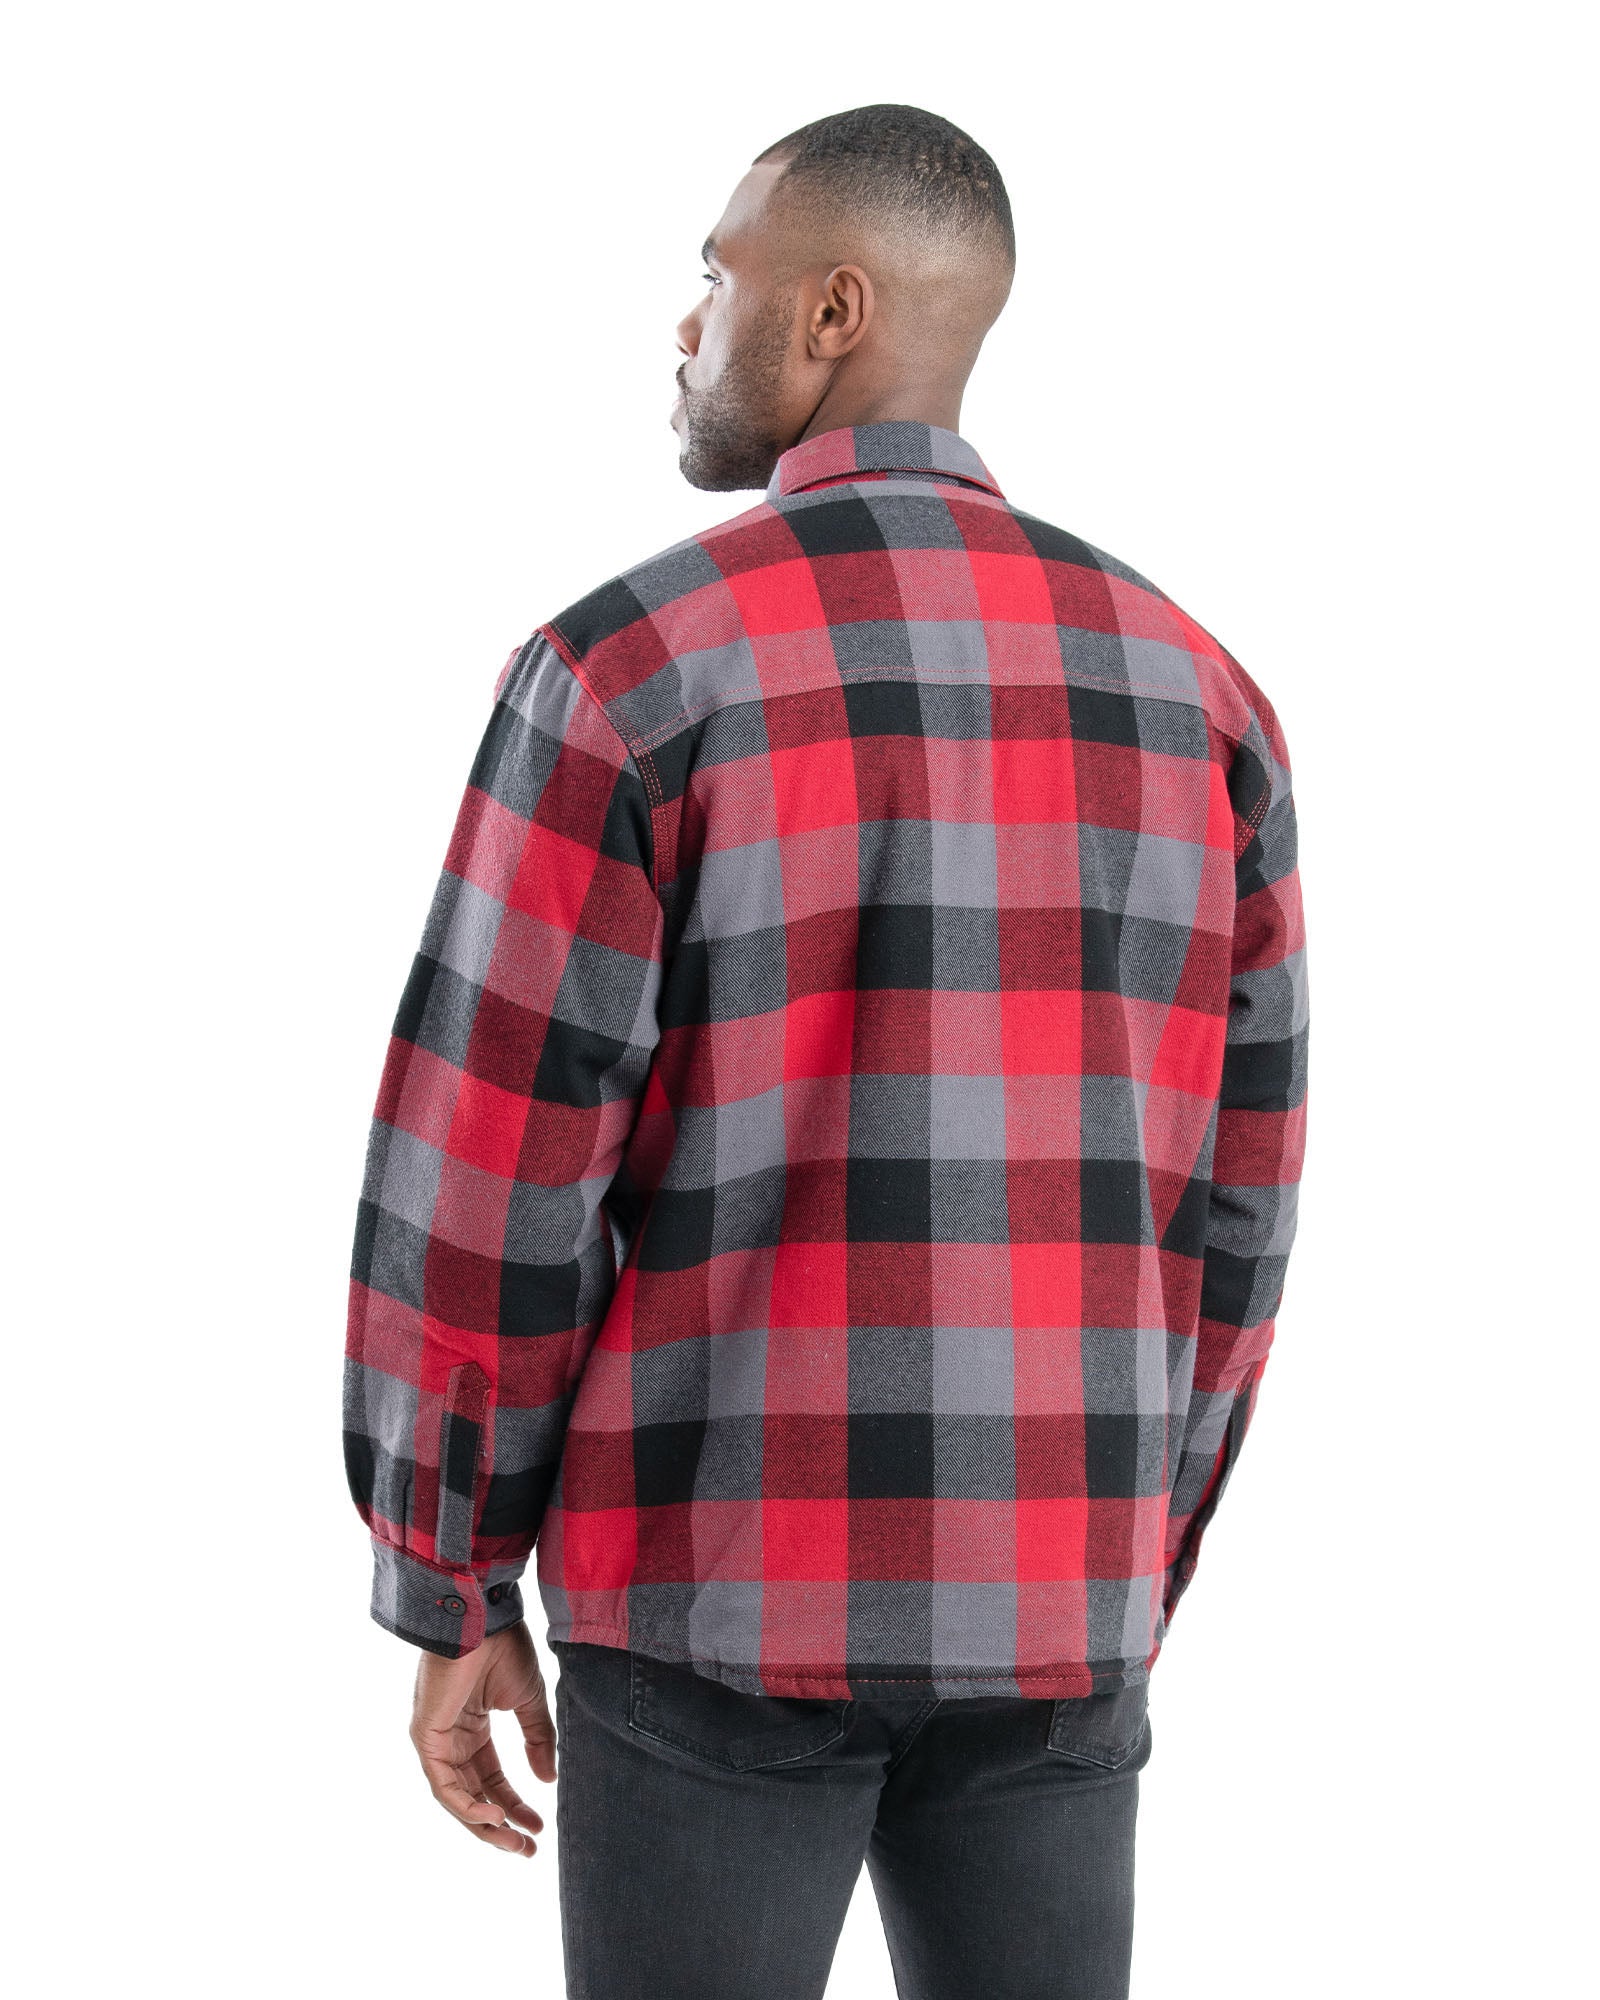 Heartland Flannel Shirt Jacket